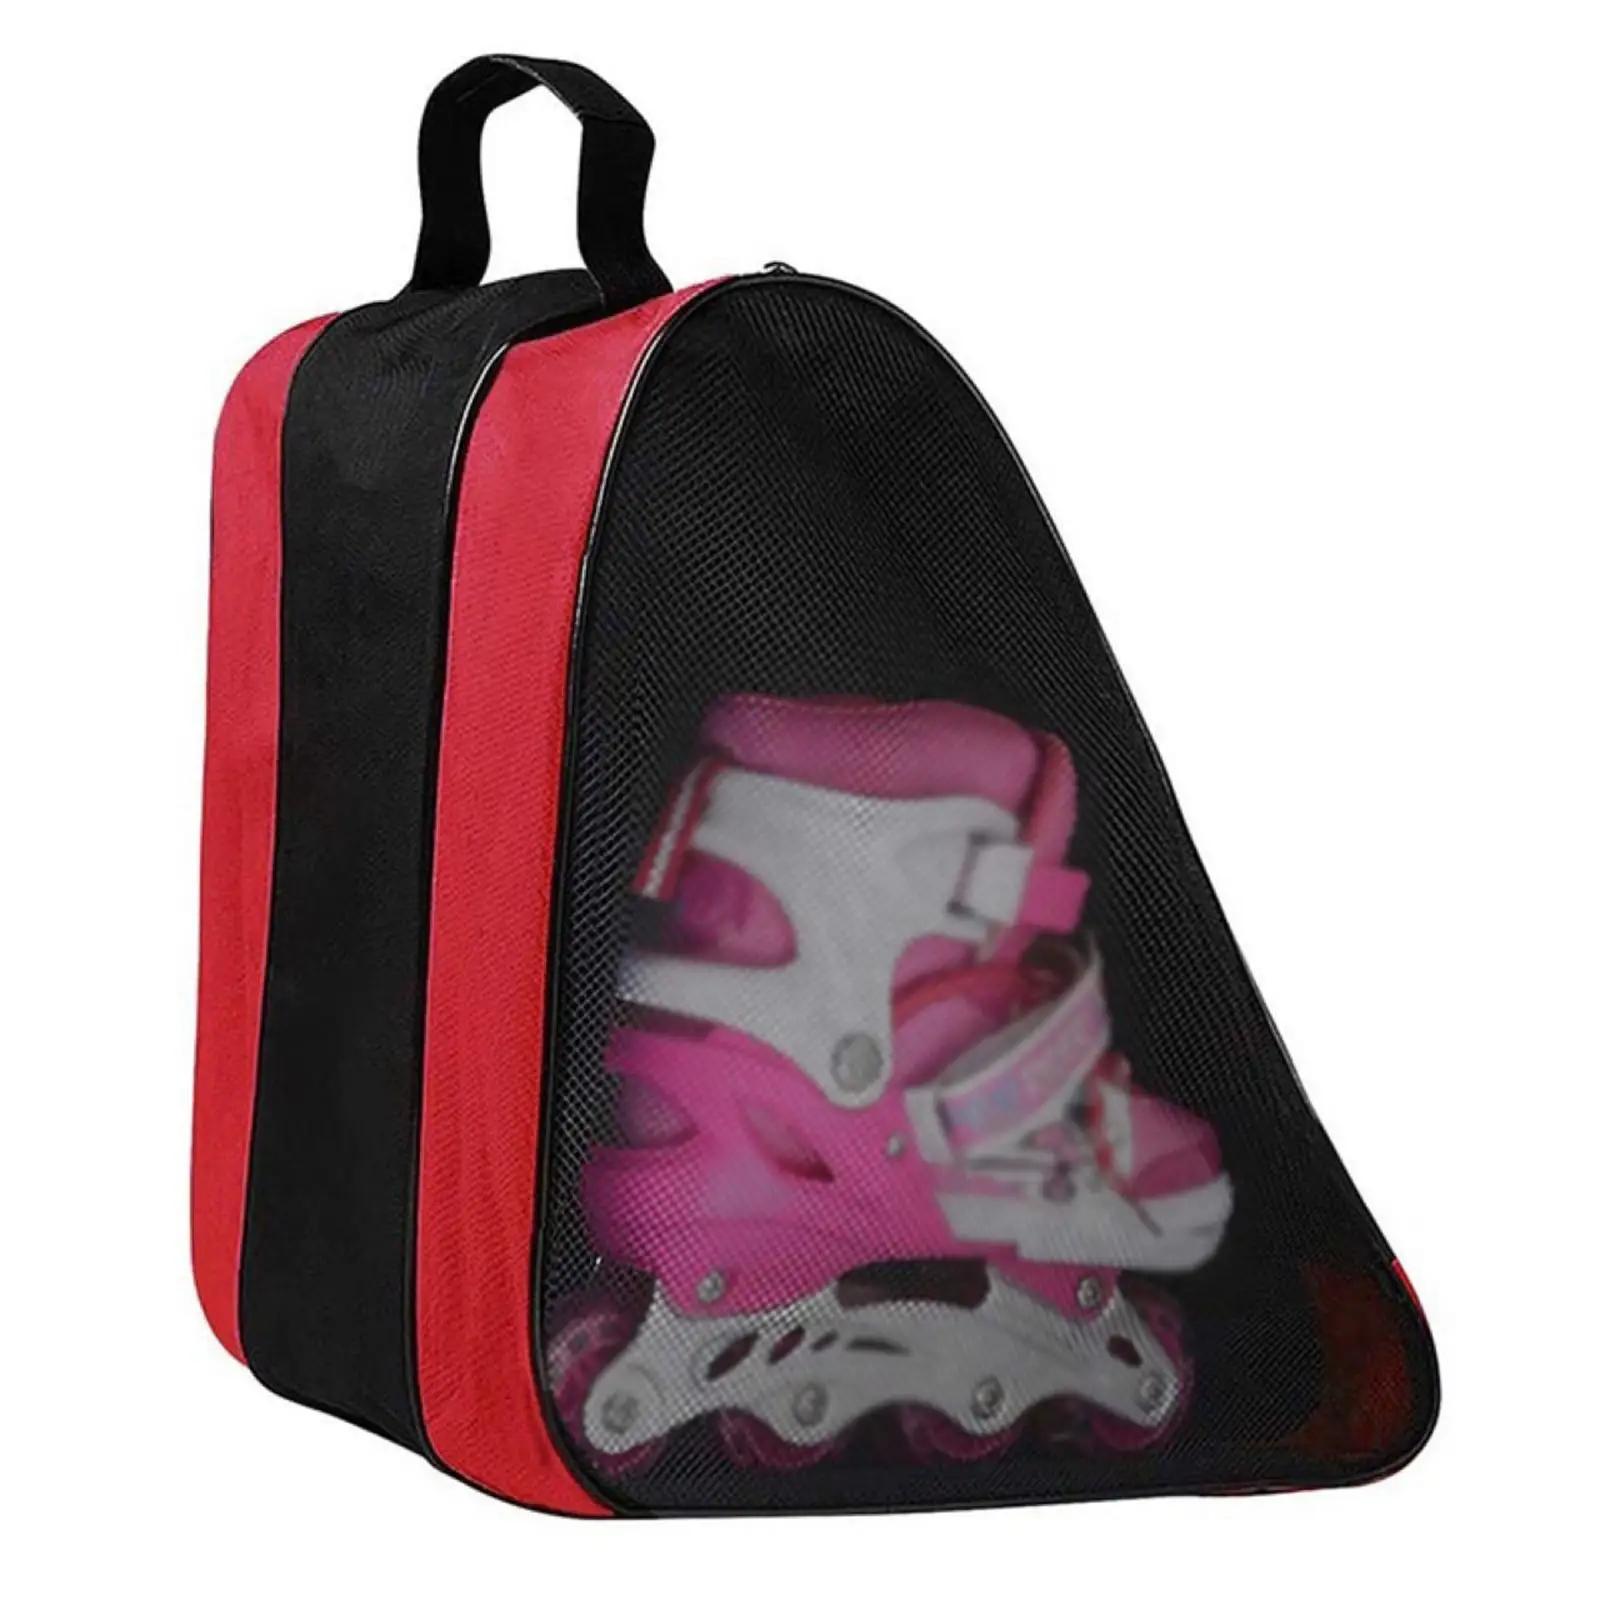 Breathable Skating Shoes Bag Ice Skating Bag Carrier Oxford Cloth Accessories Shoulder Strap Backpack Case for Sports Adult Kid